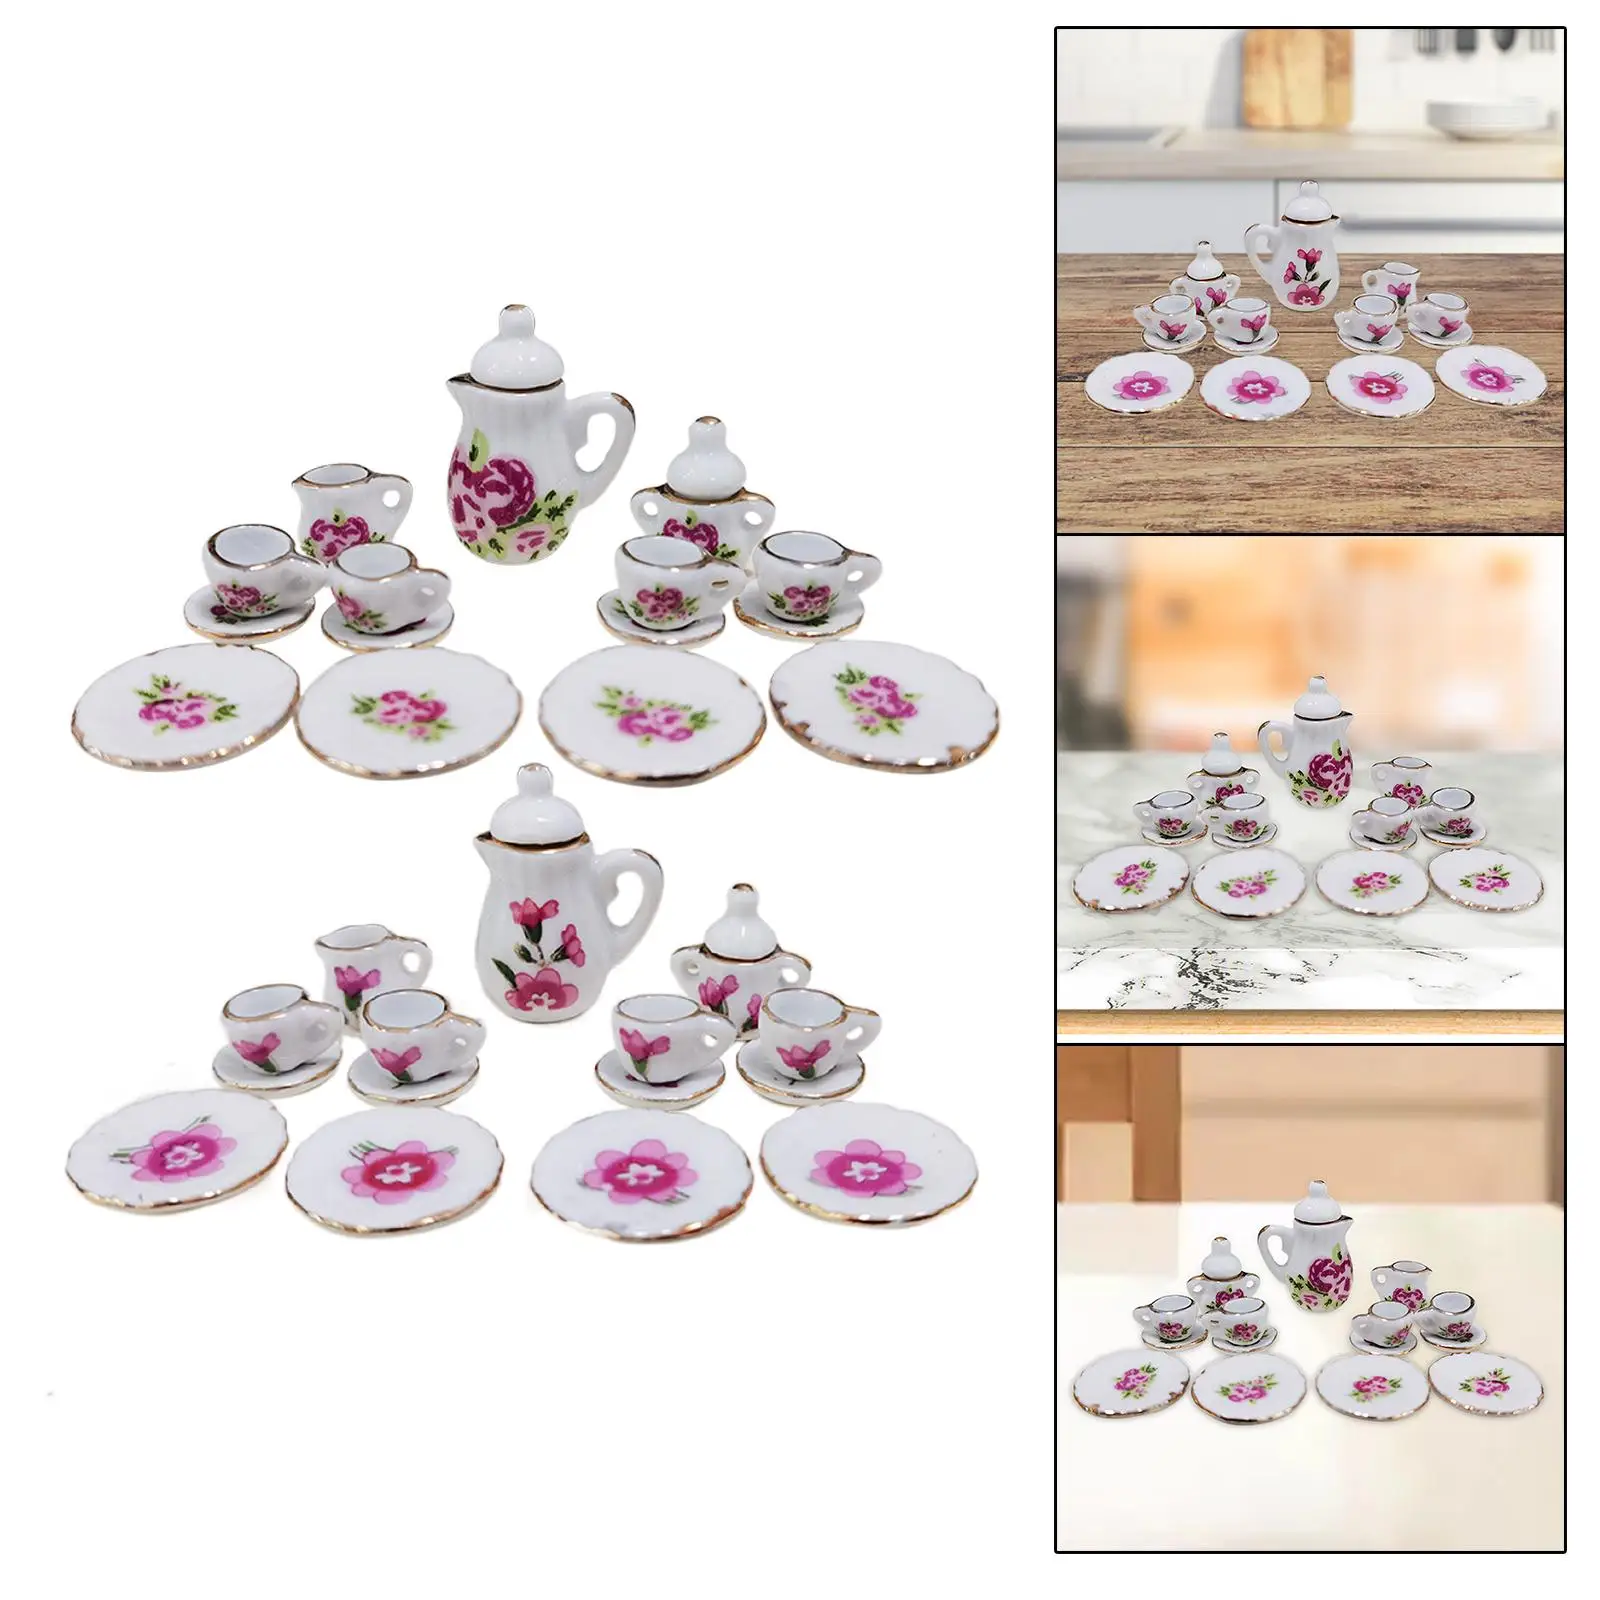 Dollhouse Miniature Porcelain Tea Cup Kitchen Home Scenery Supplies